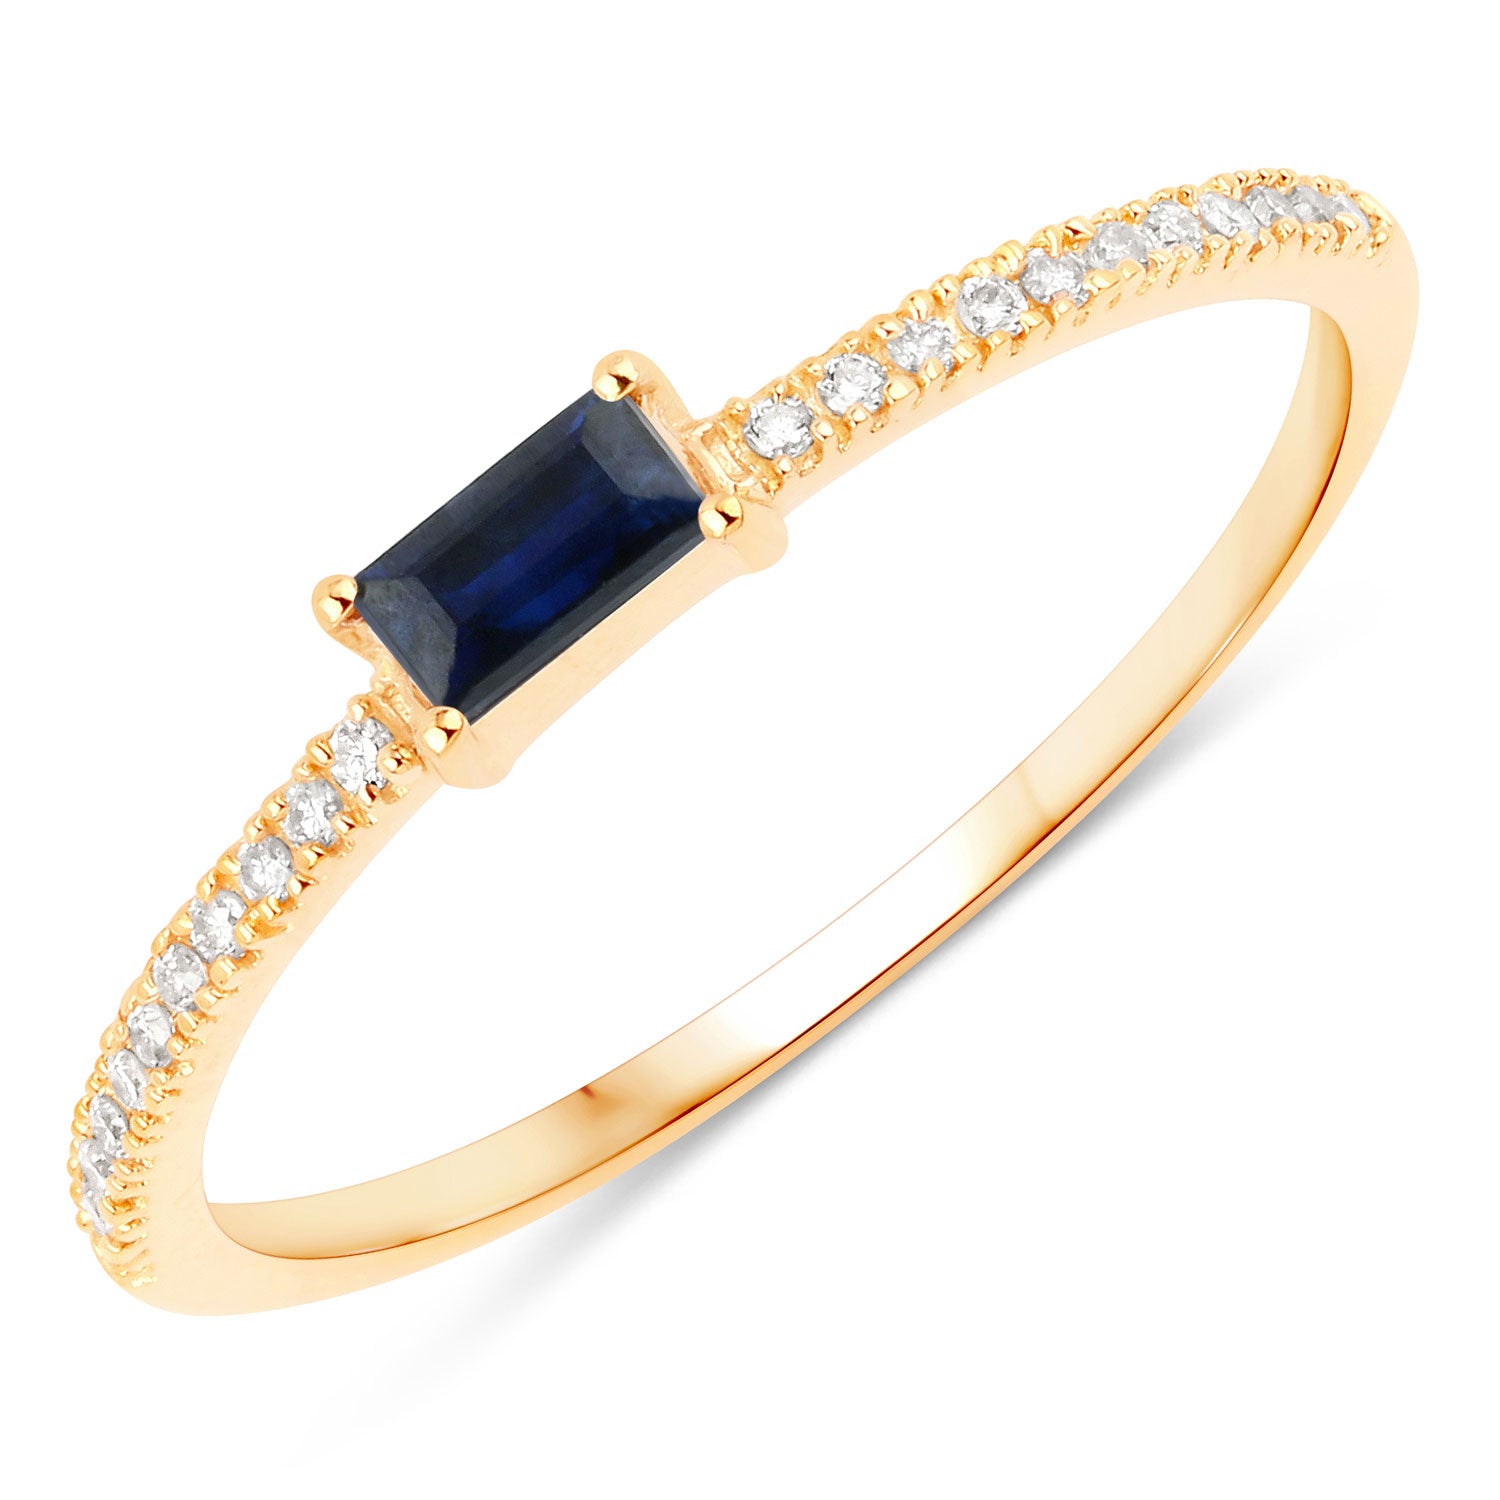 0.19 Carat Genuine Blue Sapphire and White Diamond 14K Yellow Gold Ring